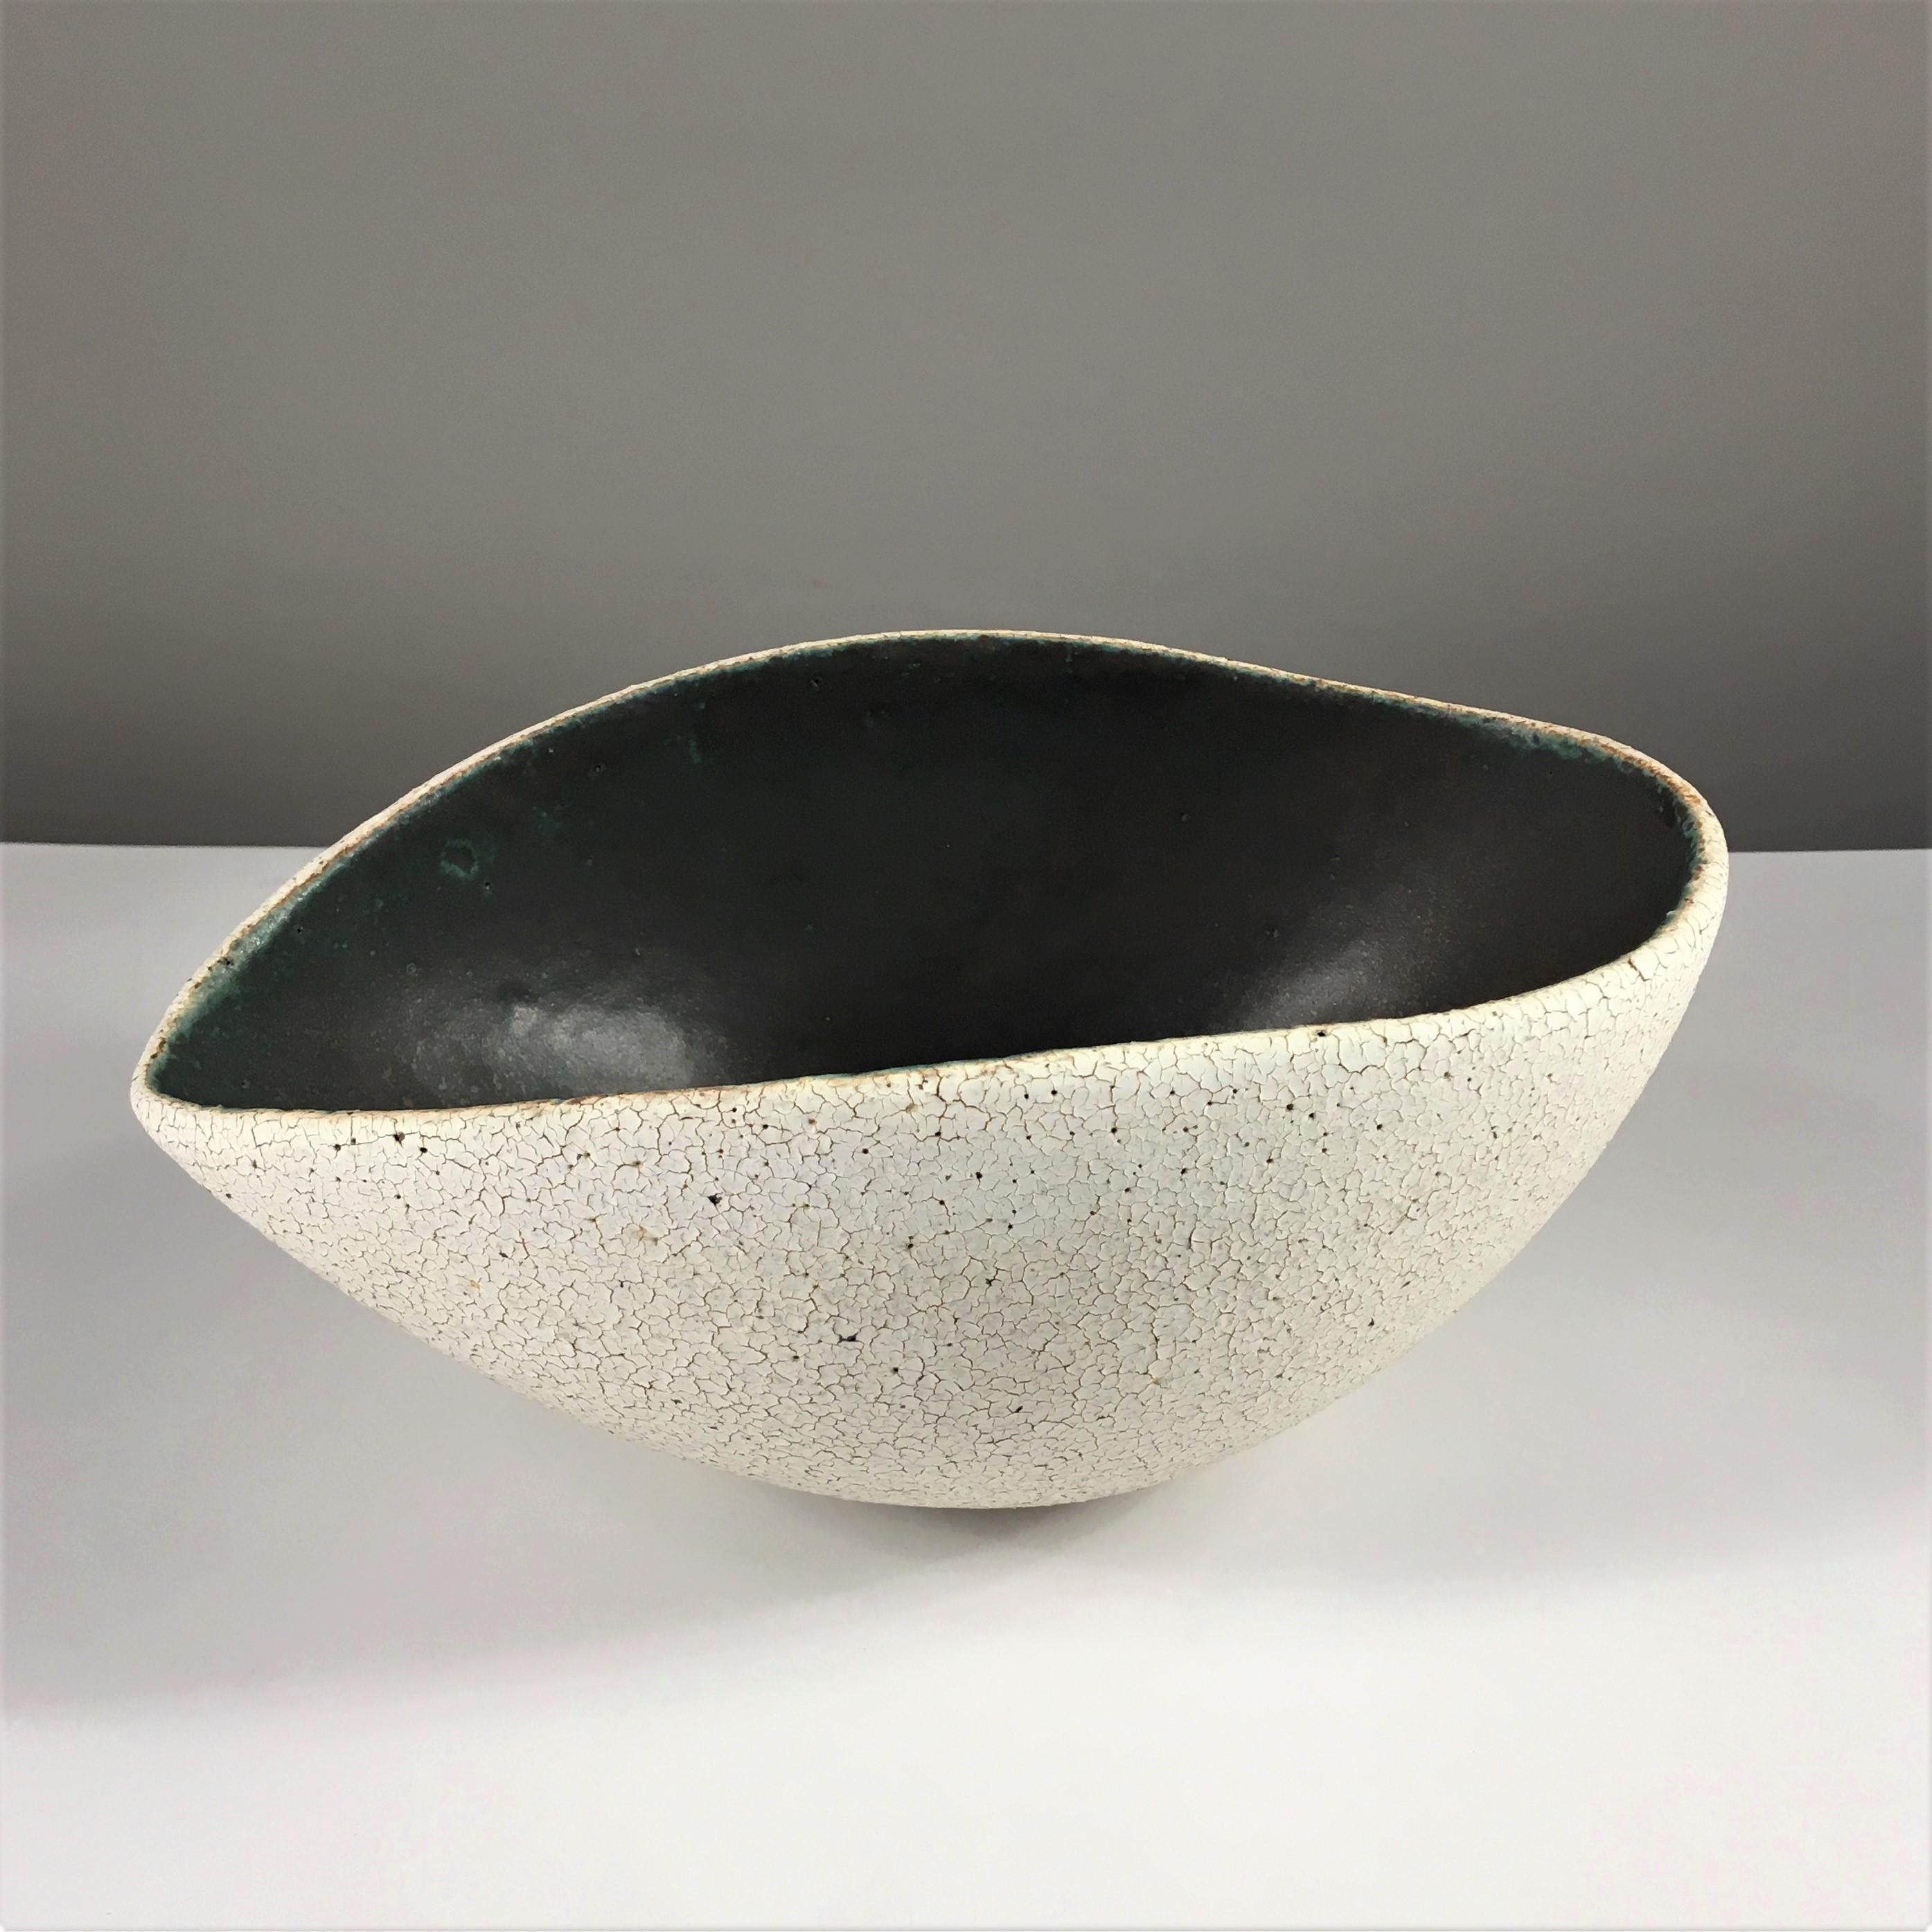 Ceramic Boat Shape Bowl with Dark Inner Glaze by Yumiko Kuga.  Dimensions: W 10